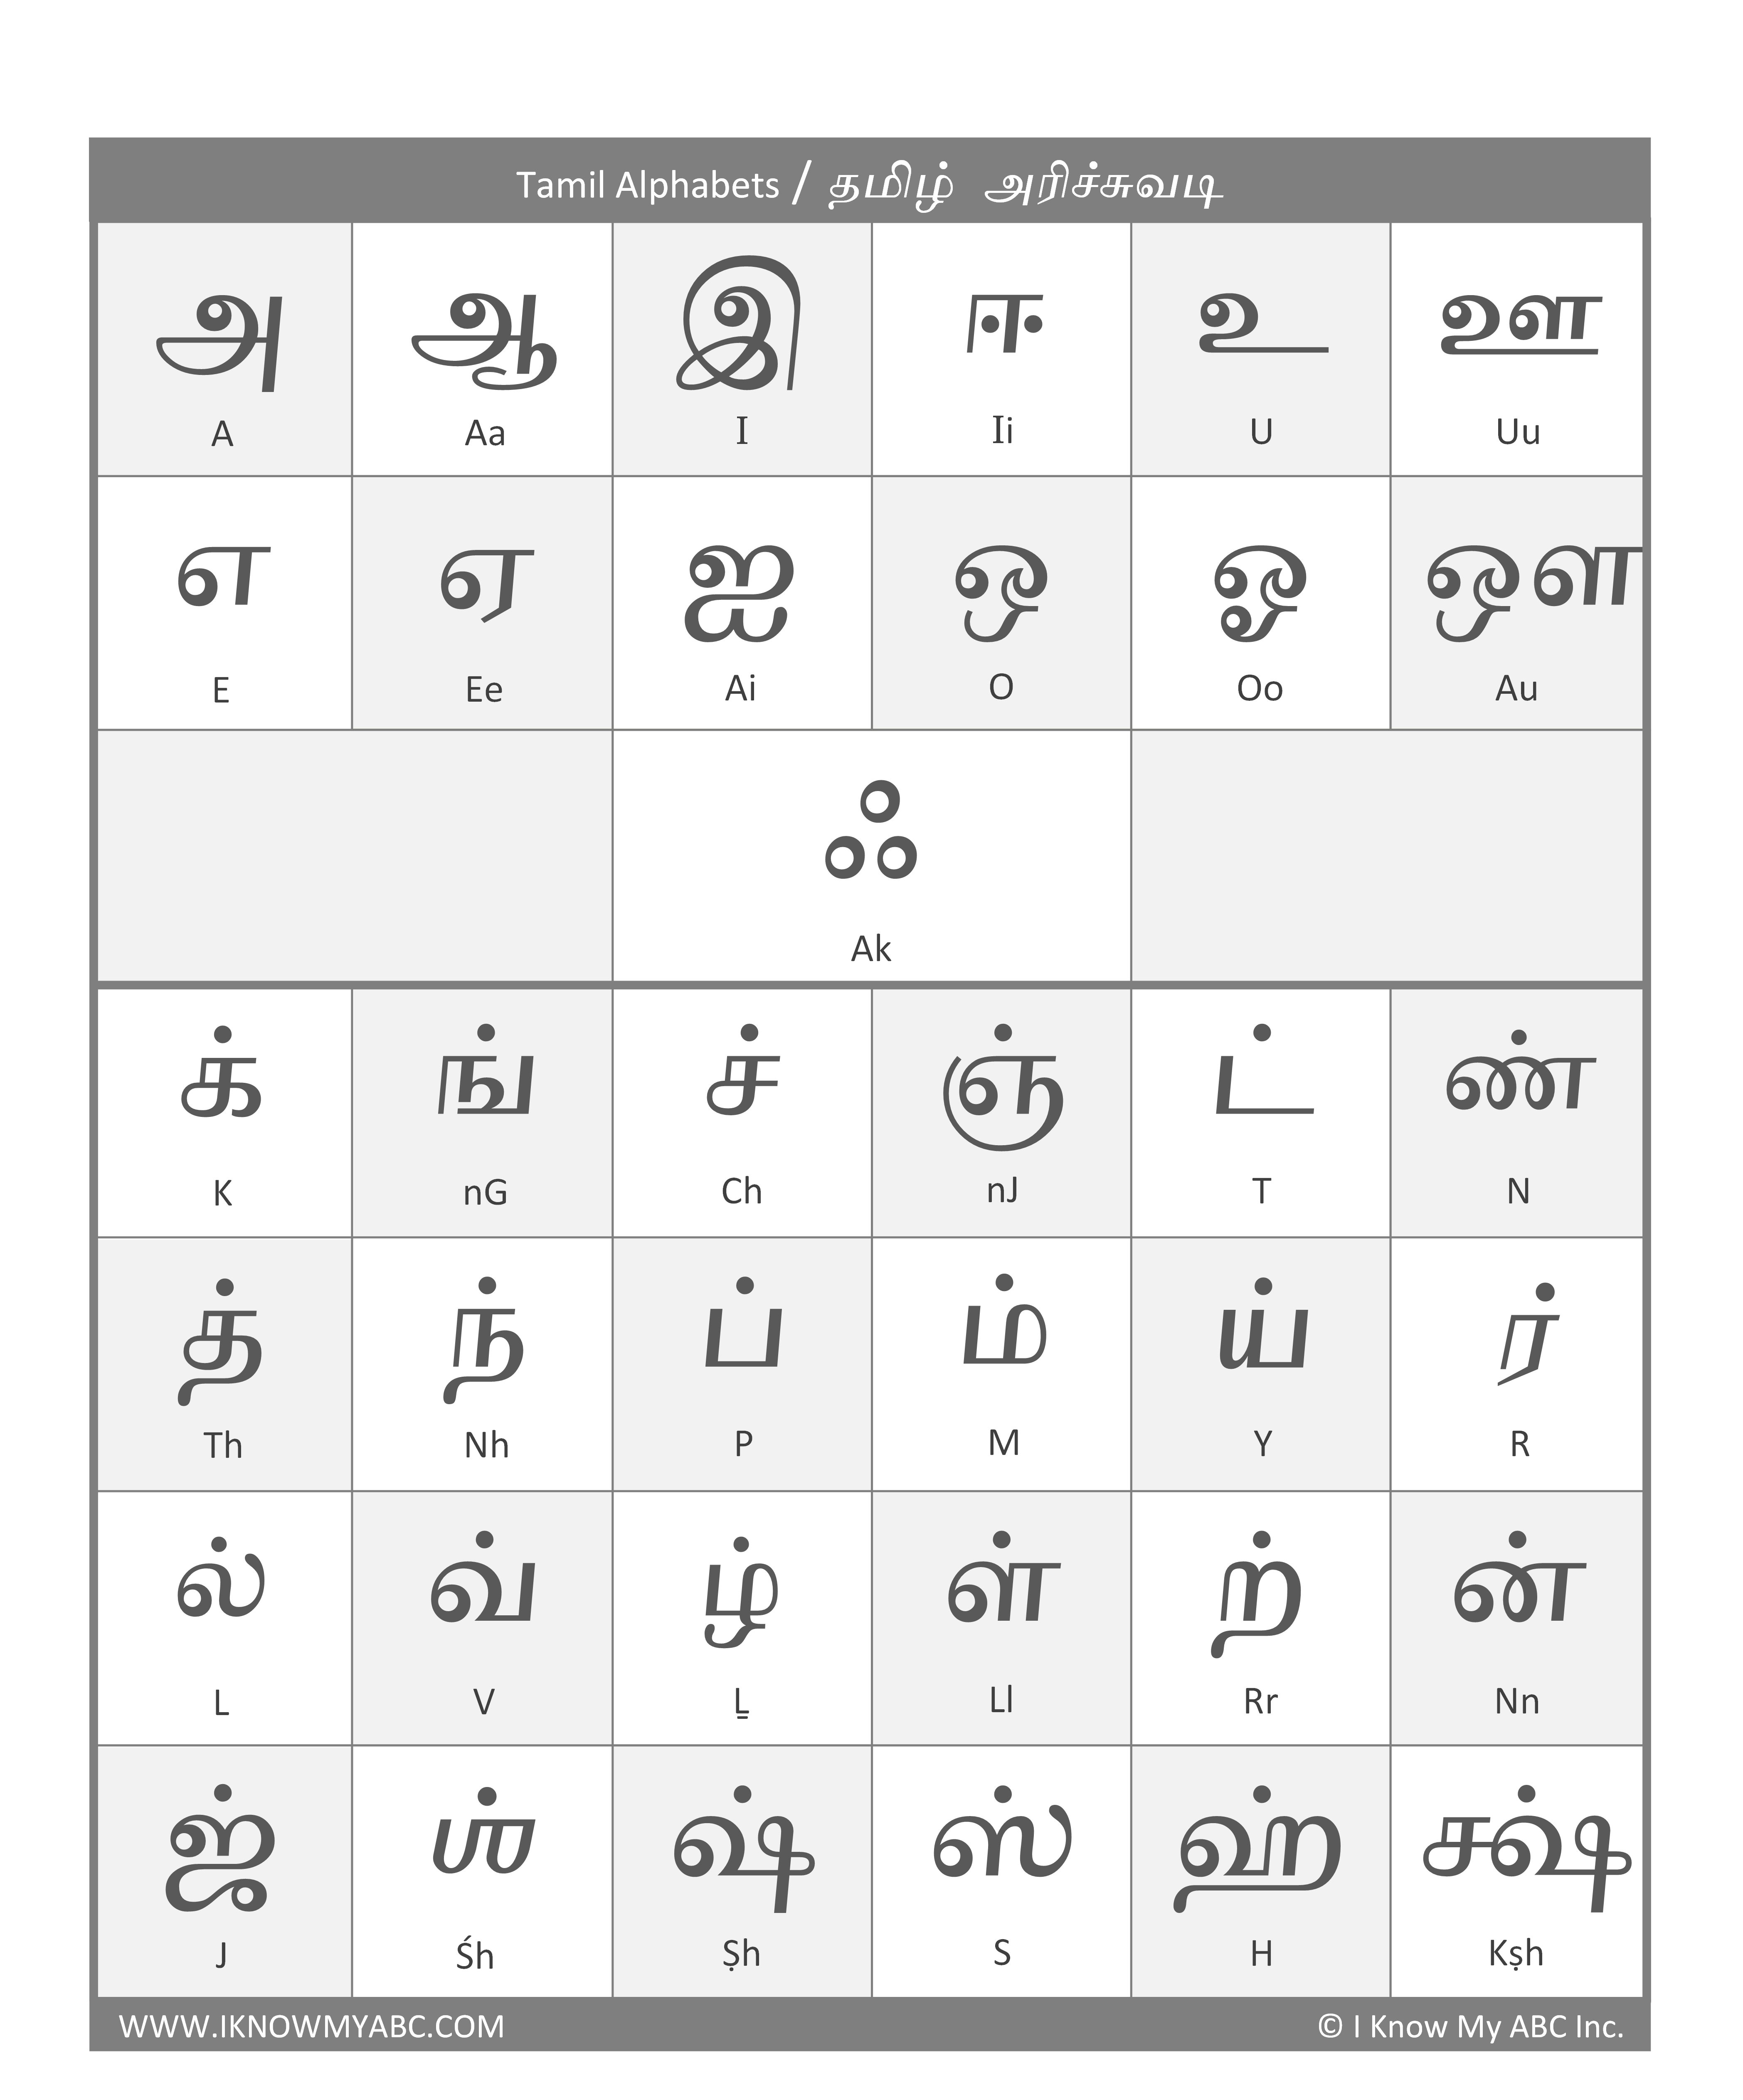 Tamil Alphabet Chart PDF